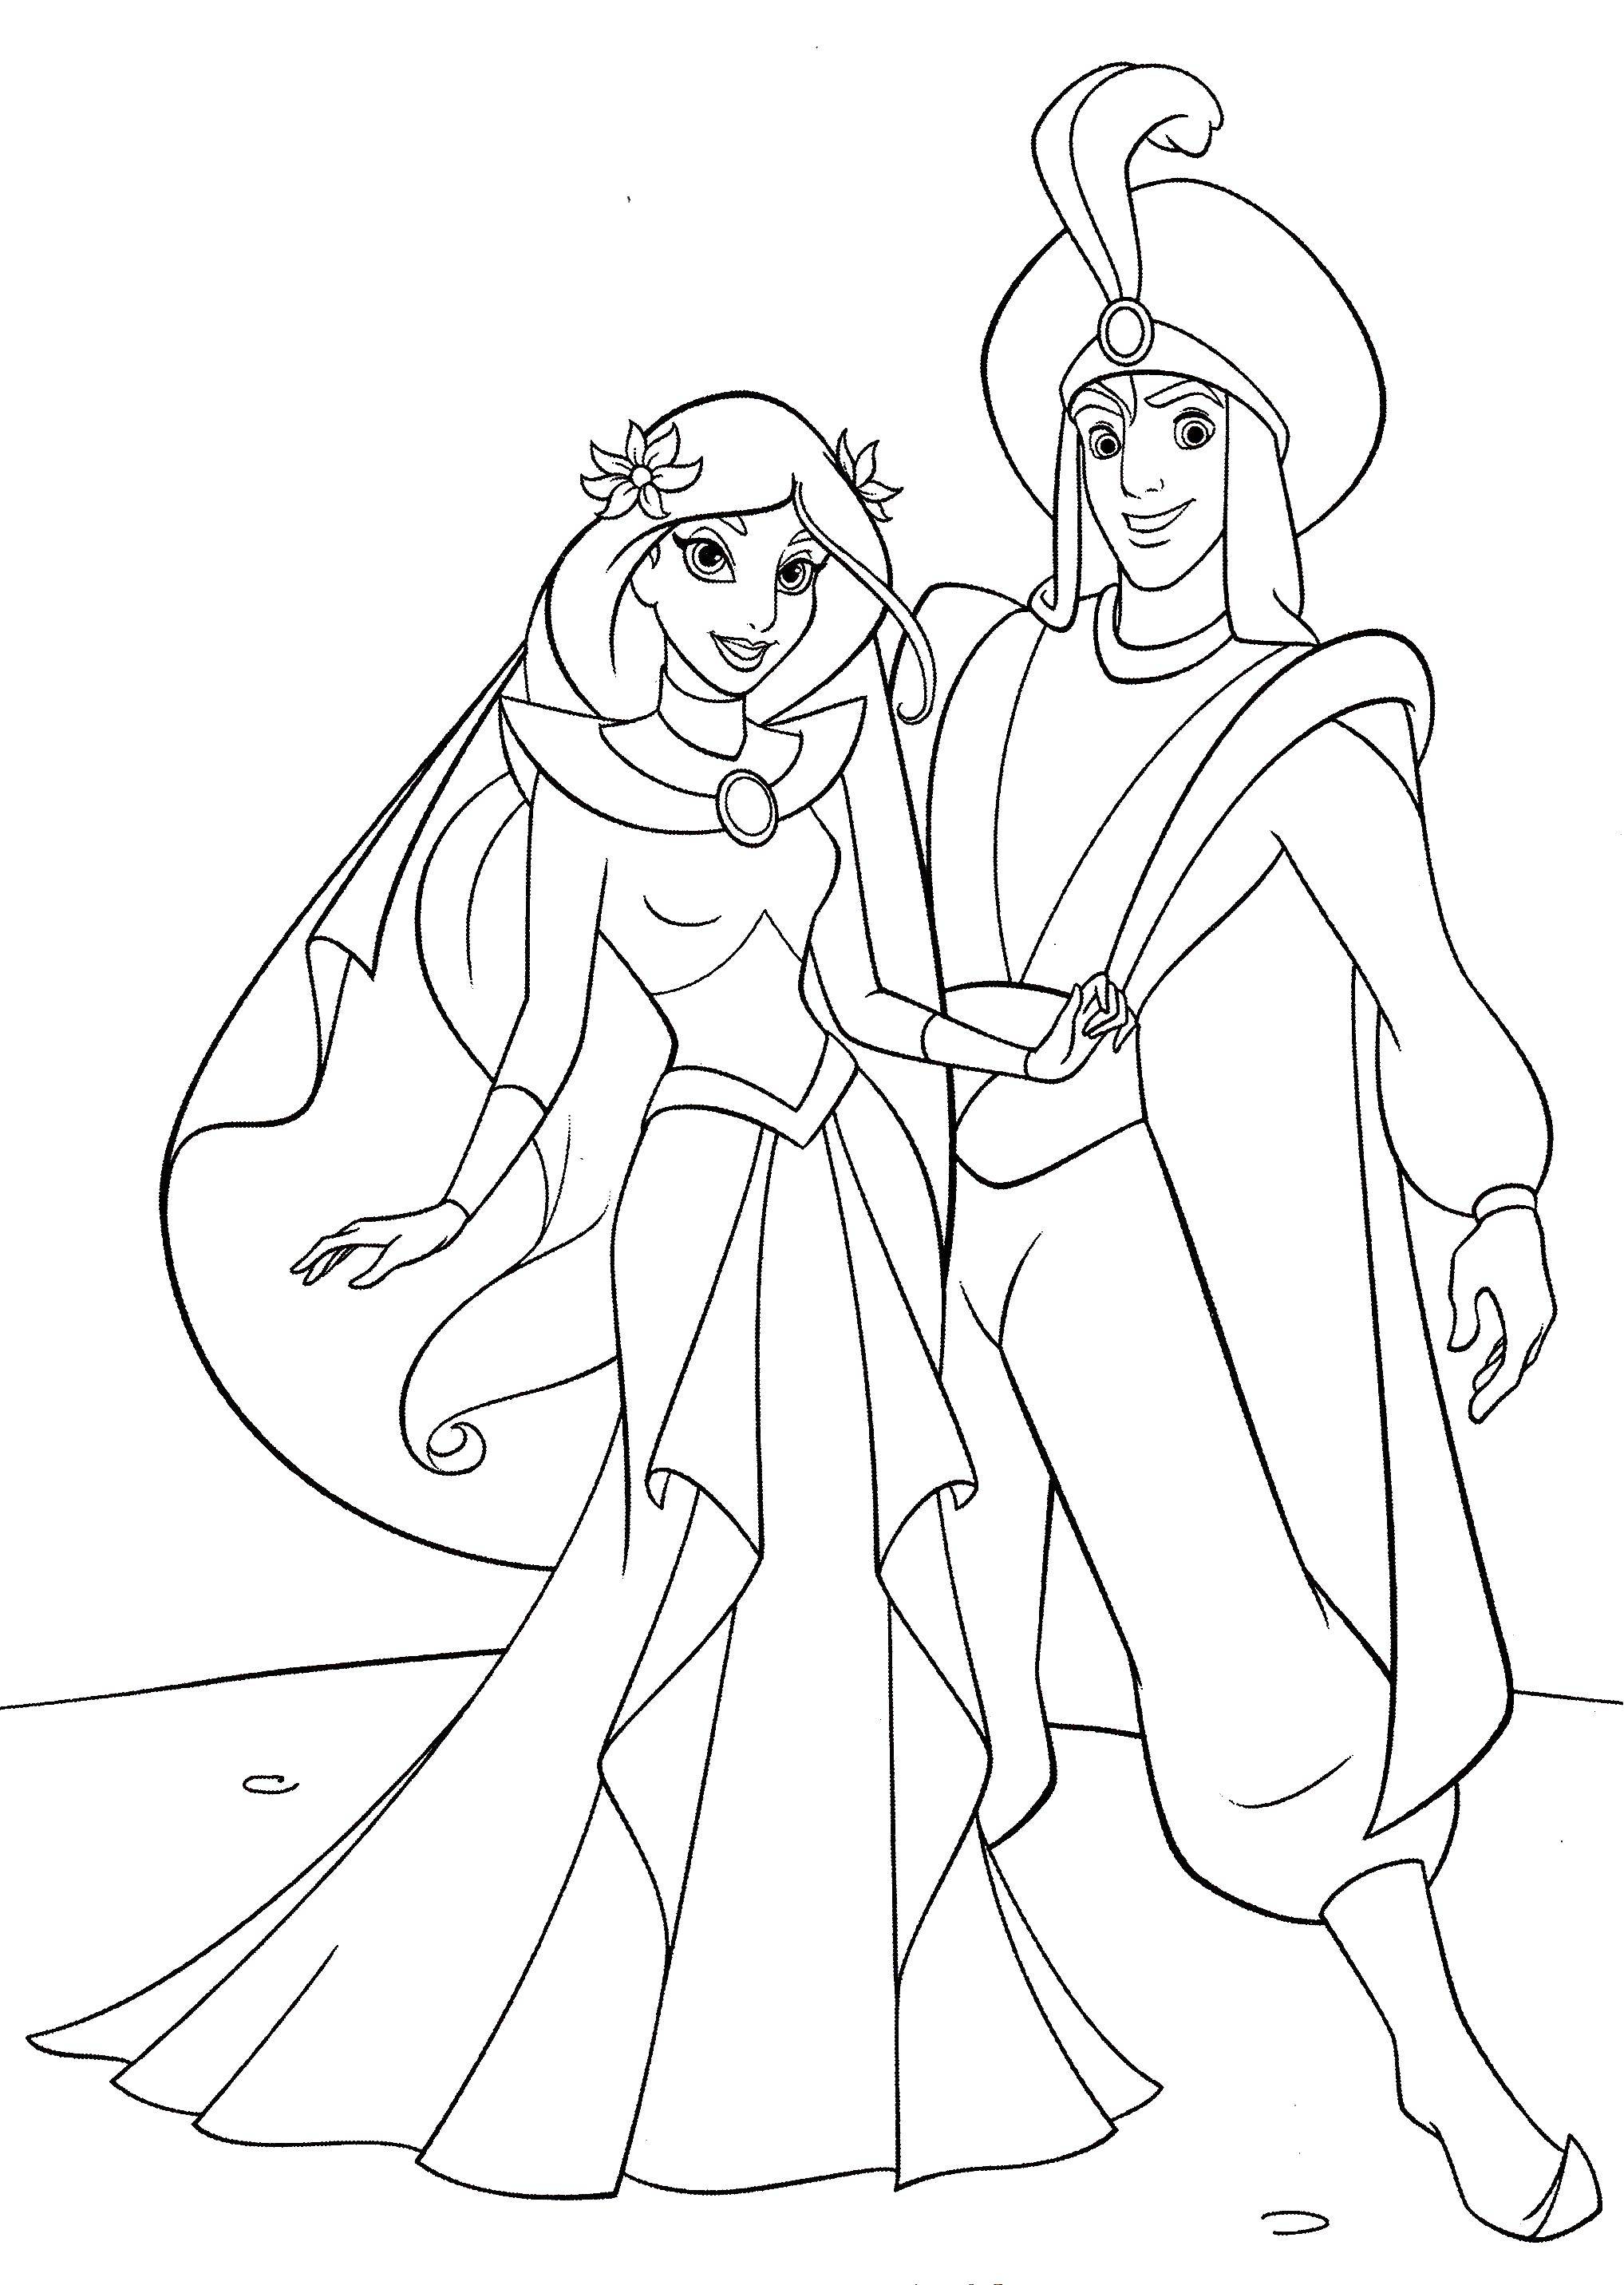 Coloring The wedding of Aladdin and Jasmine. Category Disney cartoons. Tags:  Aladdin , Jasmine.